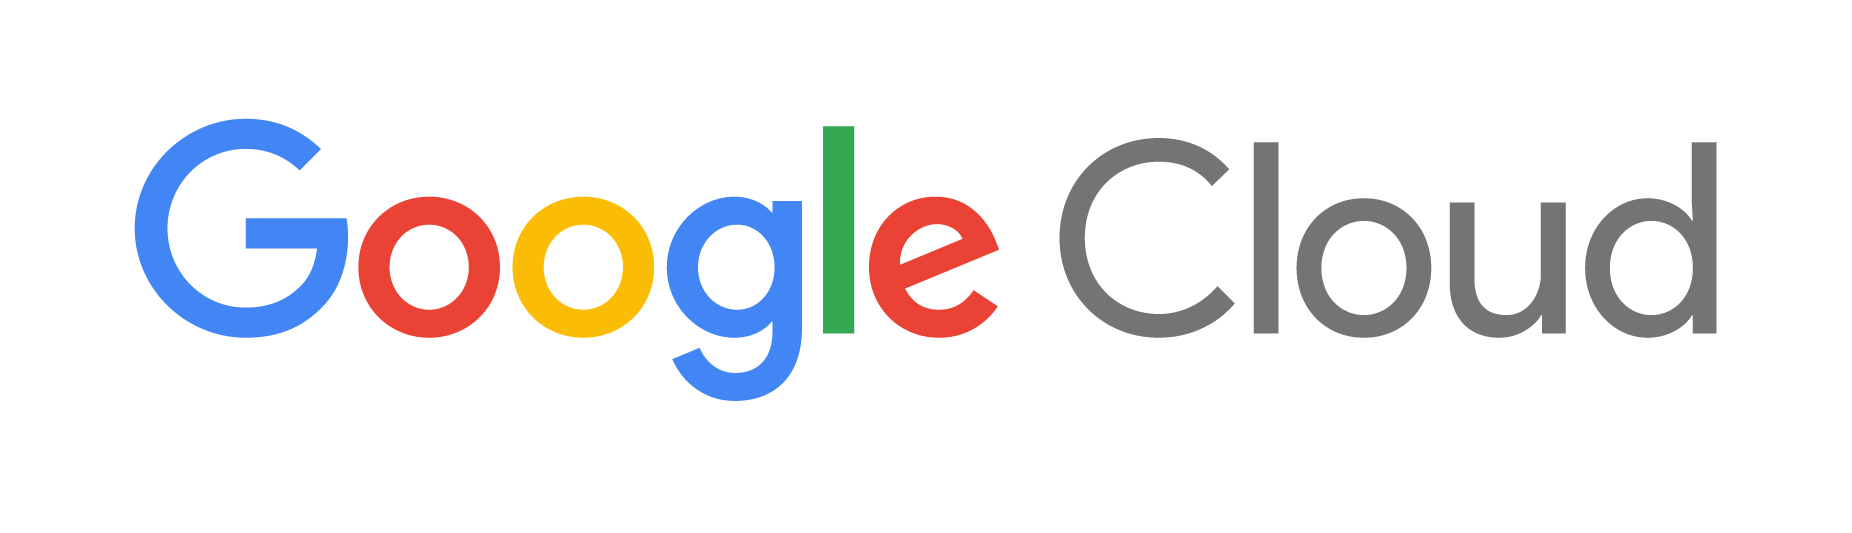 O Google